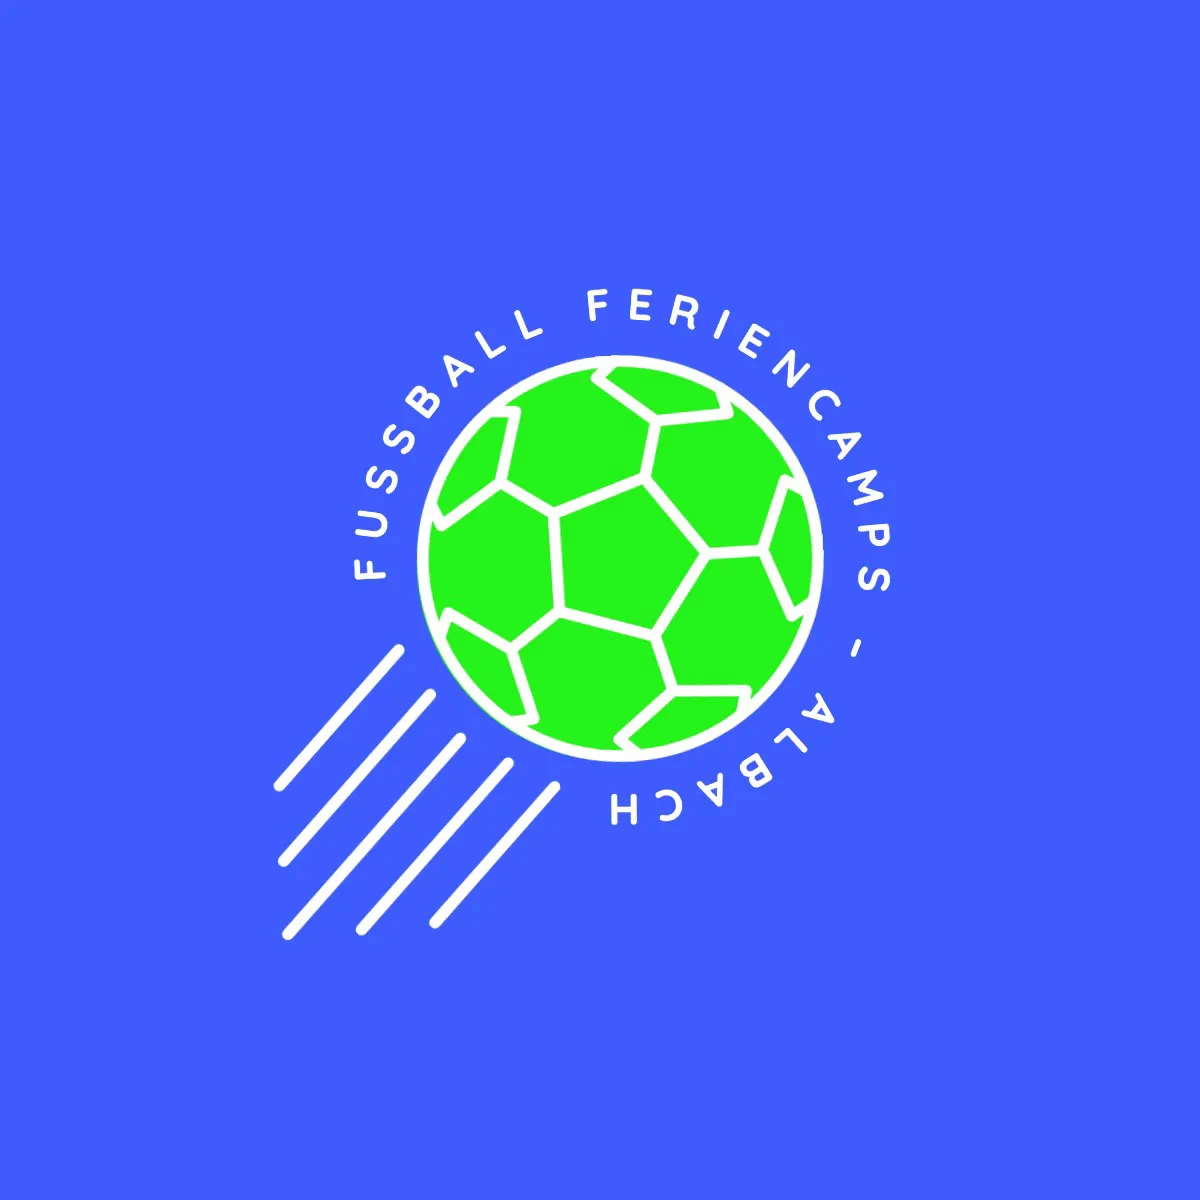 Blue and Green Dynamic Soccer Logo